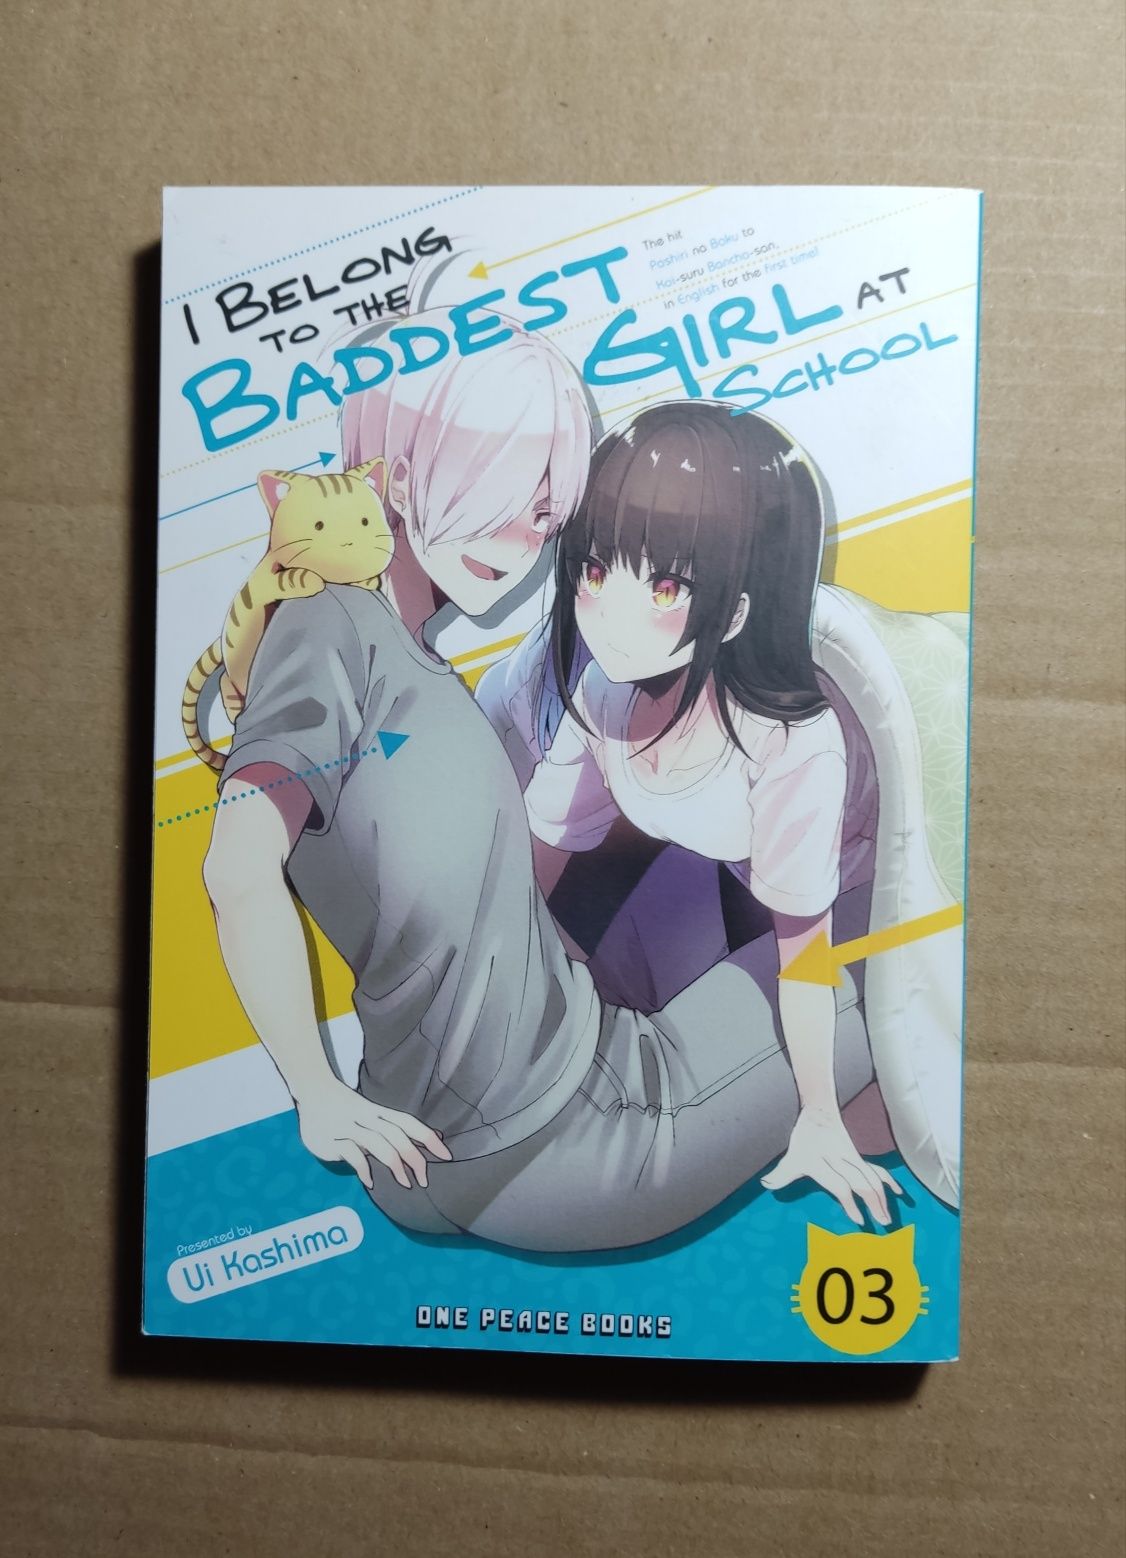 Baddest Girl at school tom 3 manga anime książka komiks angielski